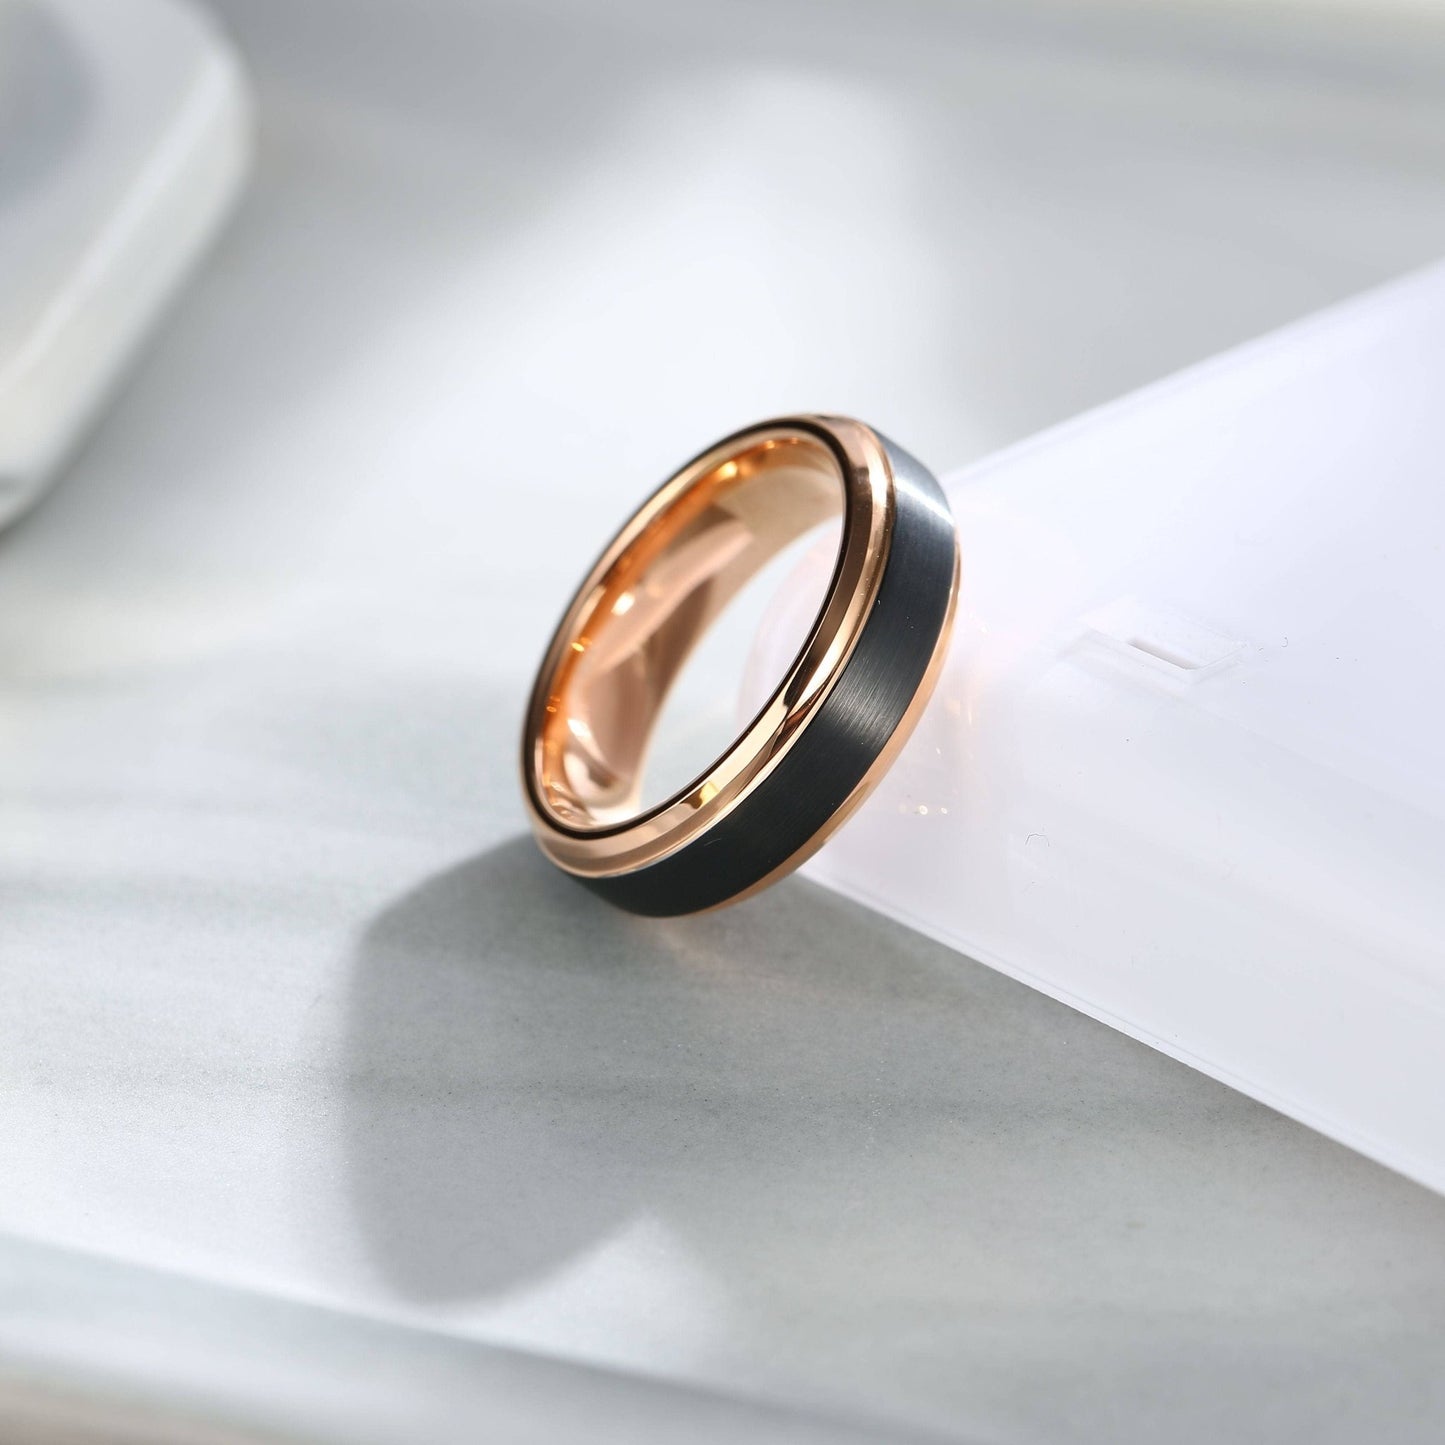 8mm Black and Rose Gold Tungsten Carbide Men's Wedding Ring - Black Diamonds New York